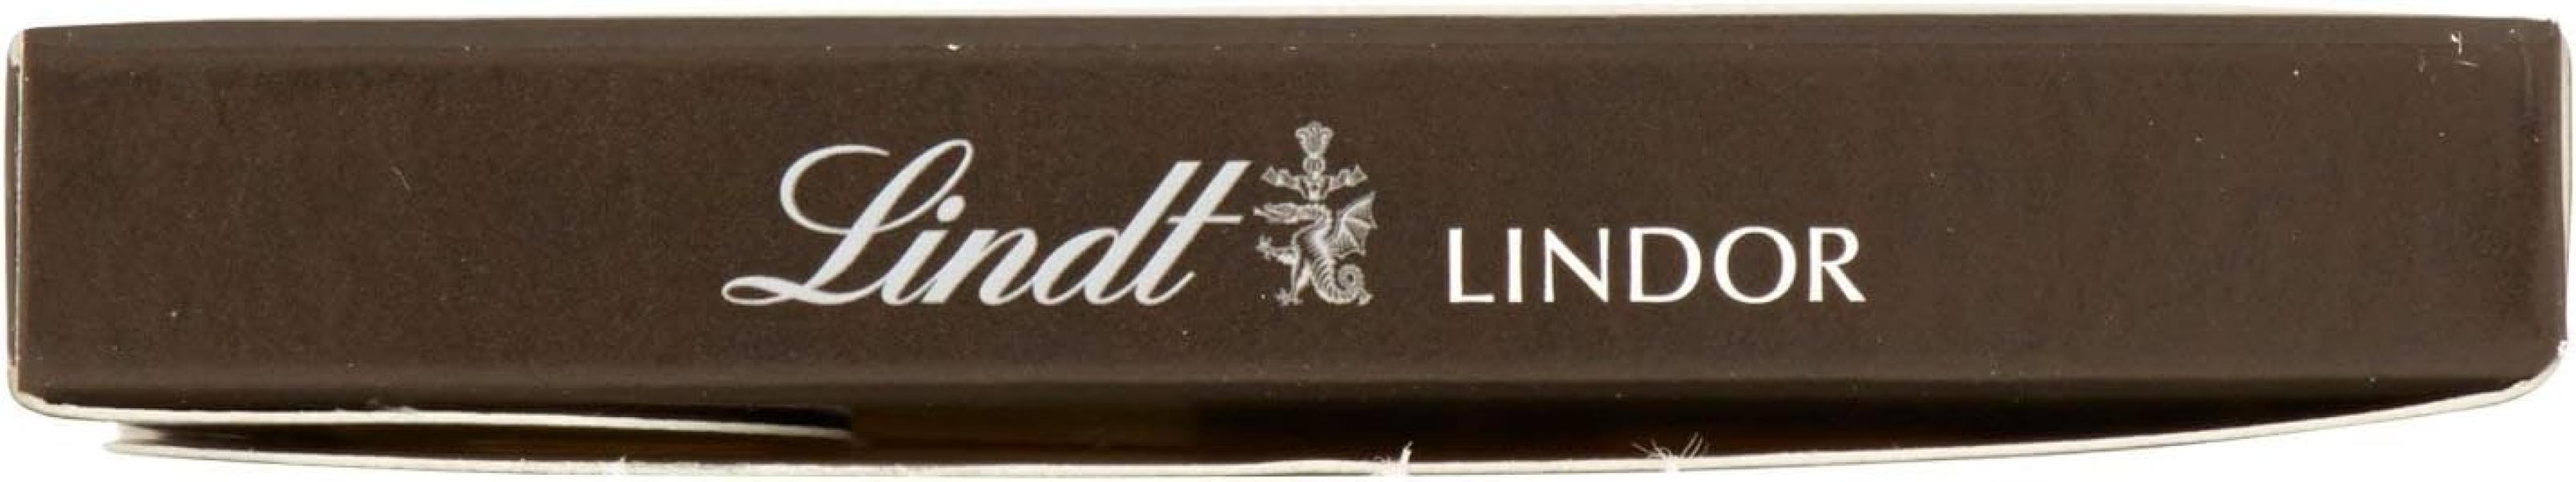 tavoletta-di-cioccolato-fondente-60-lindt-lindor-100gr-6